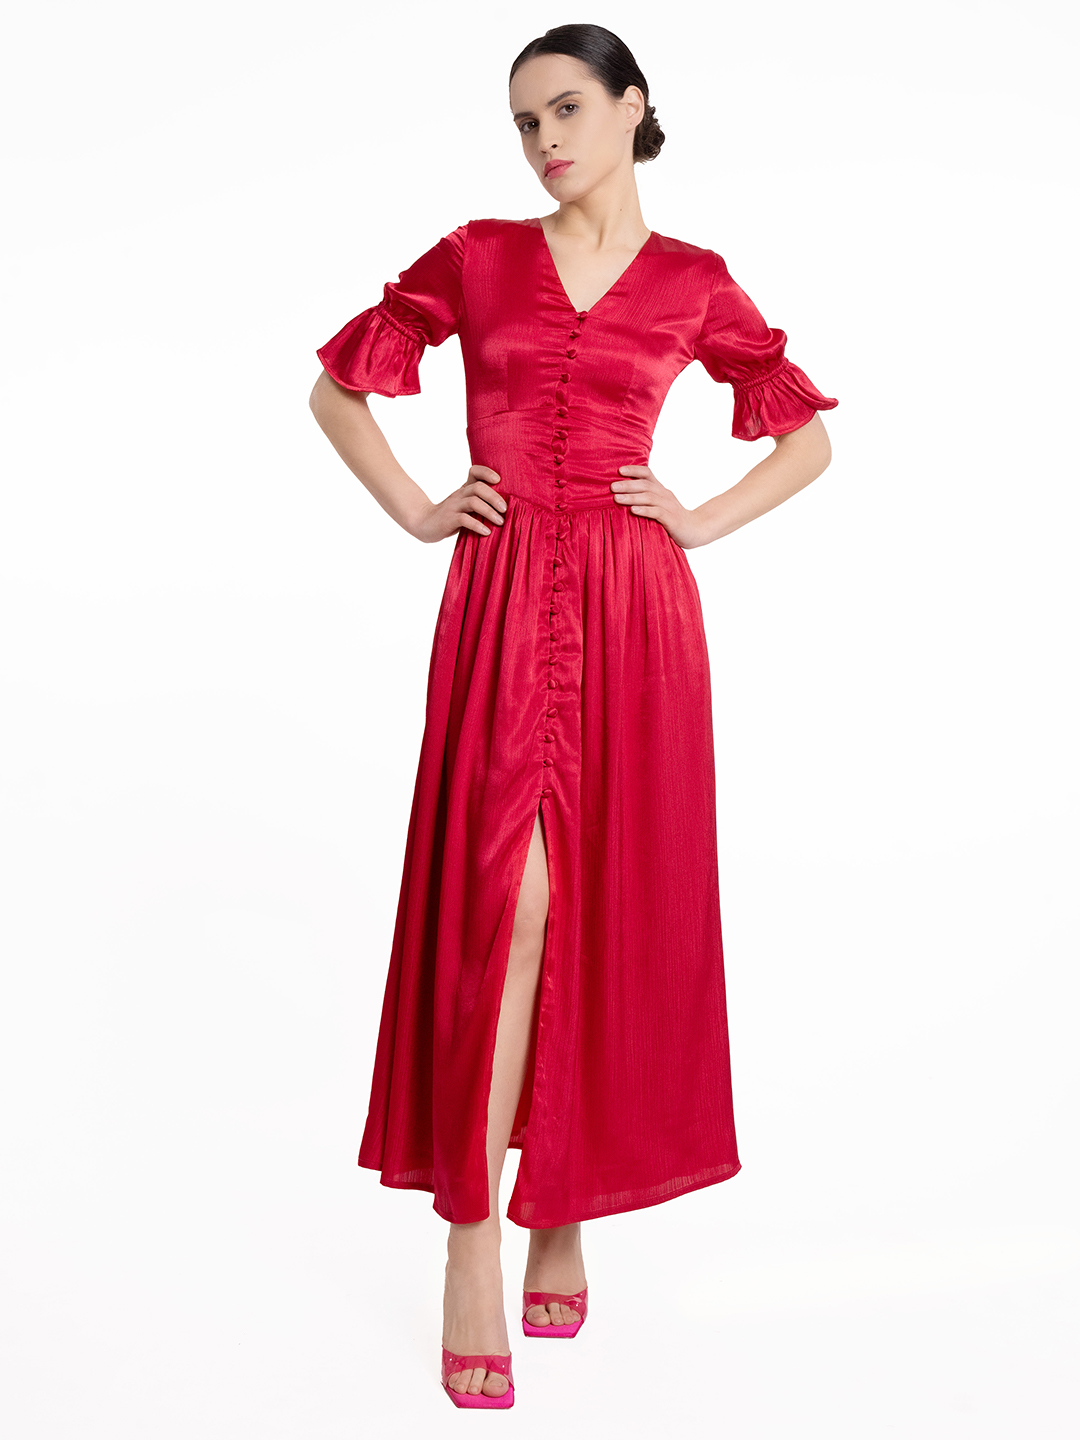 Roseate Ruffle Dress - Front